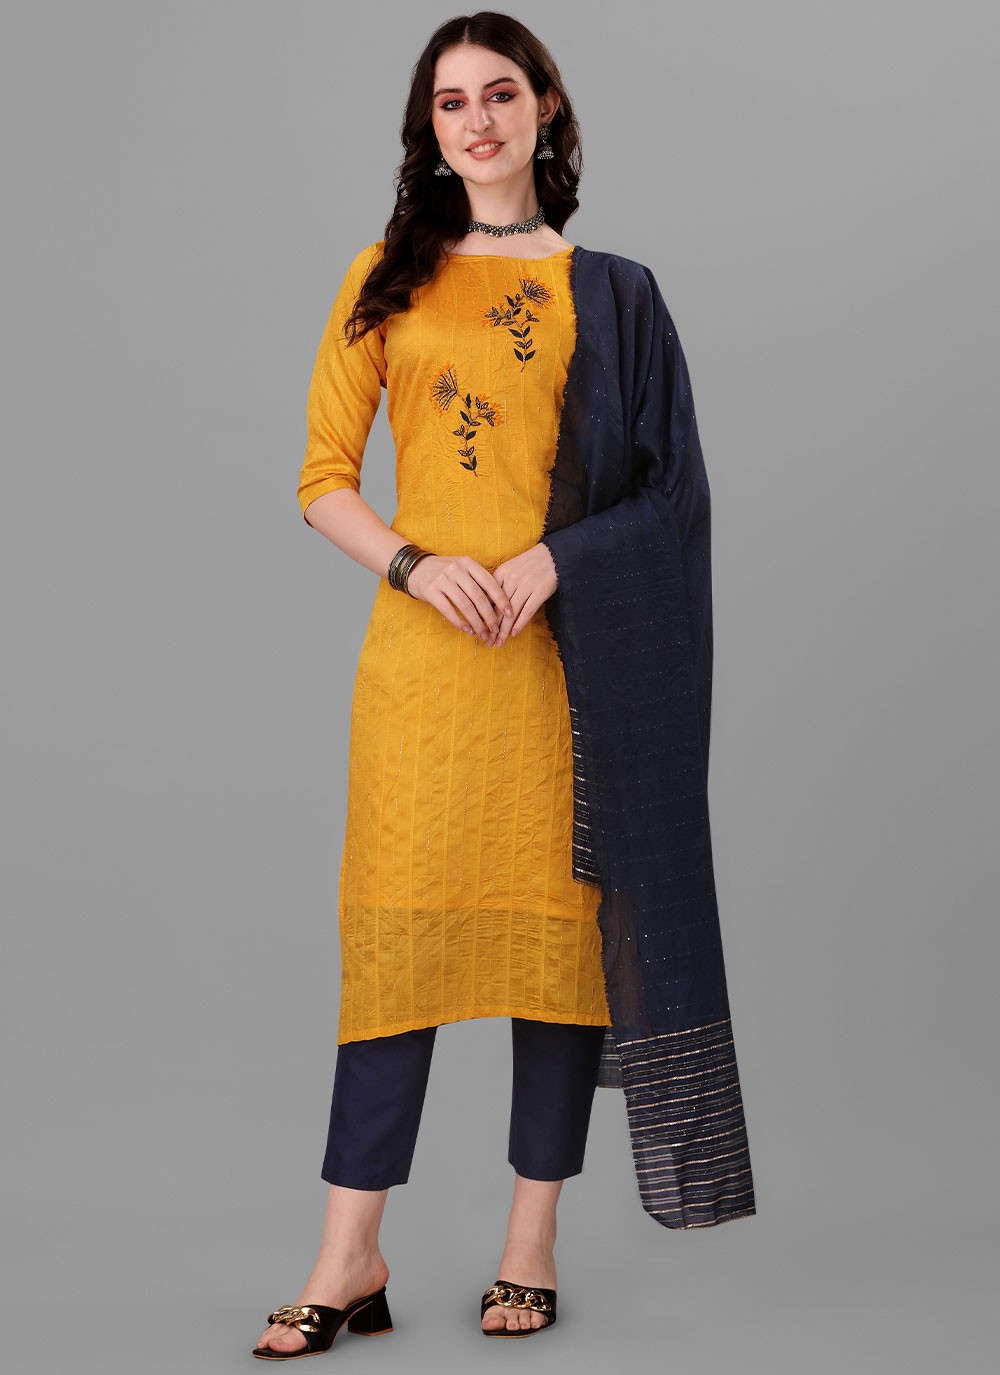 Handloom Cotton Mustard Embroidered Trendy Salwar Kameez